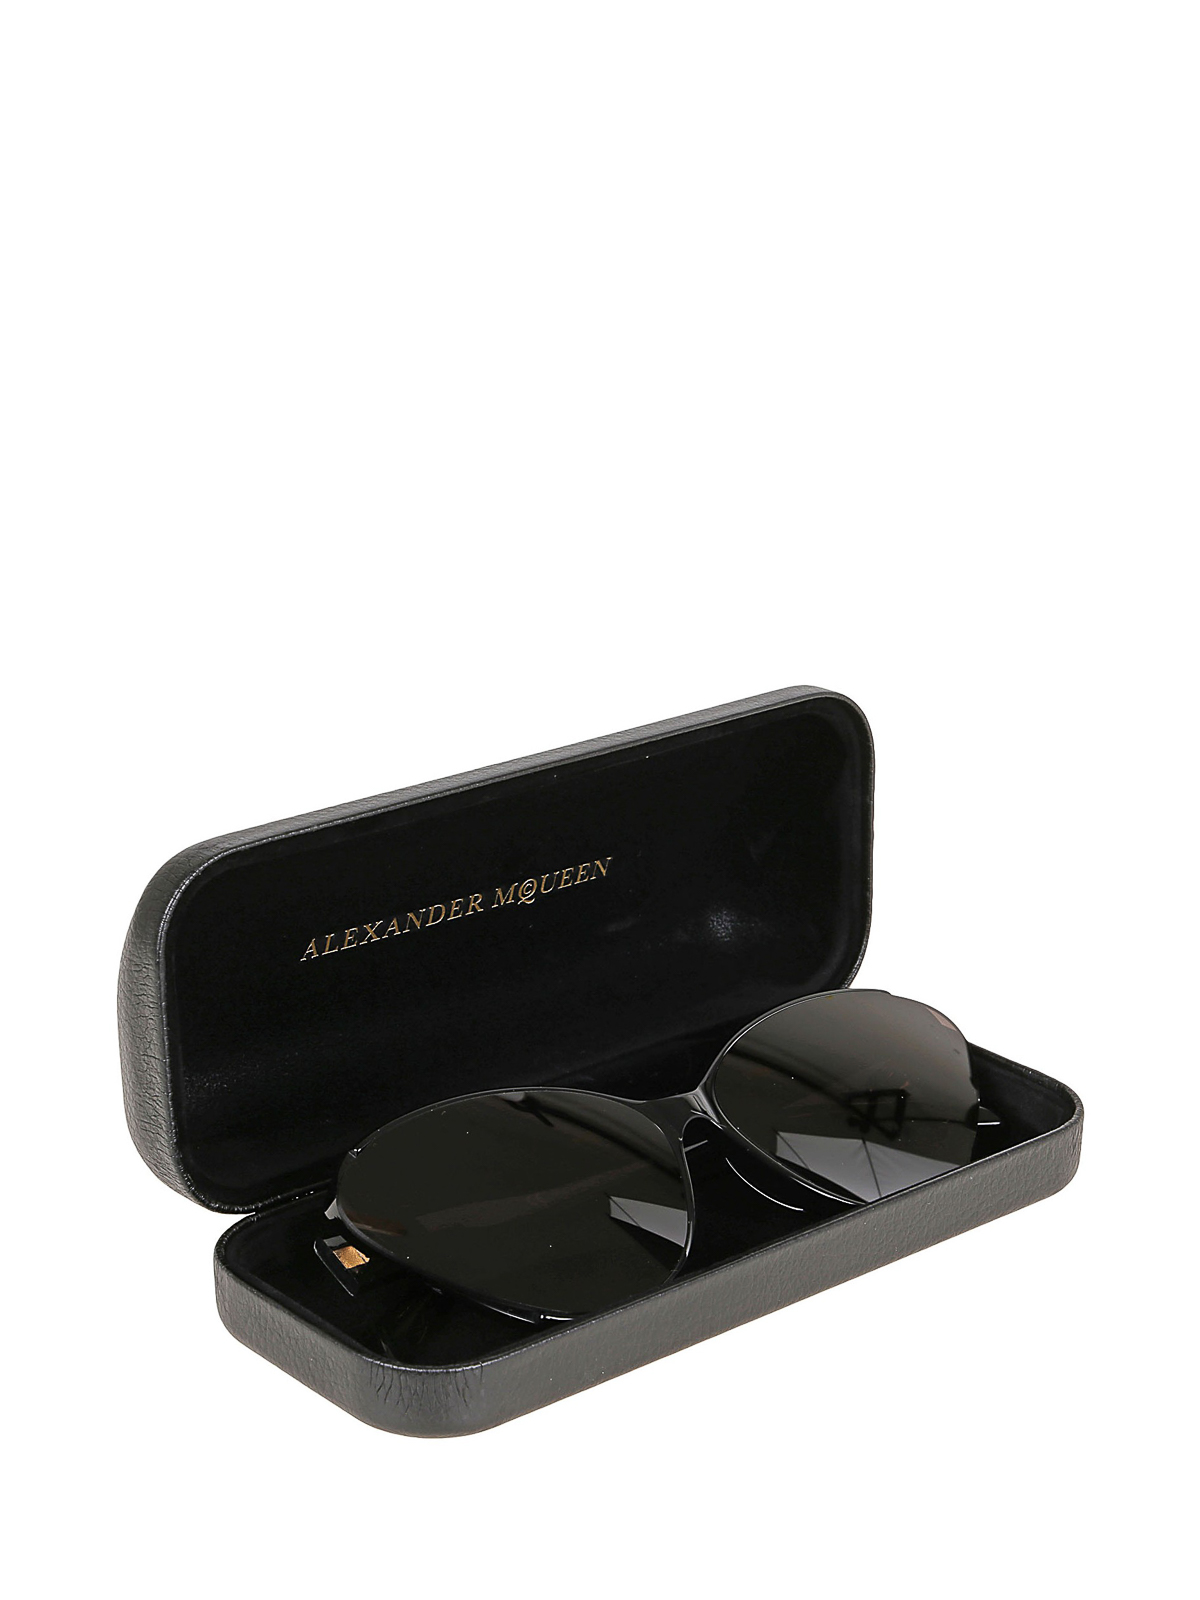 alexander mcqueen sunglasses case